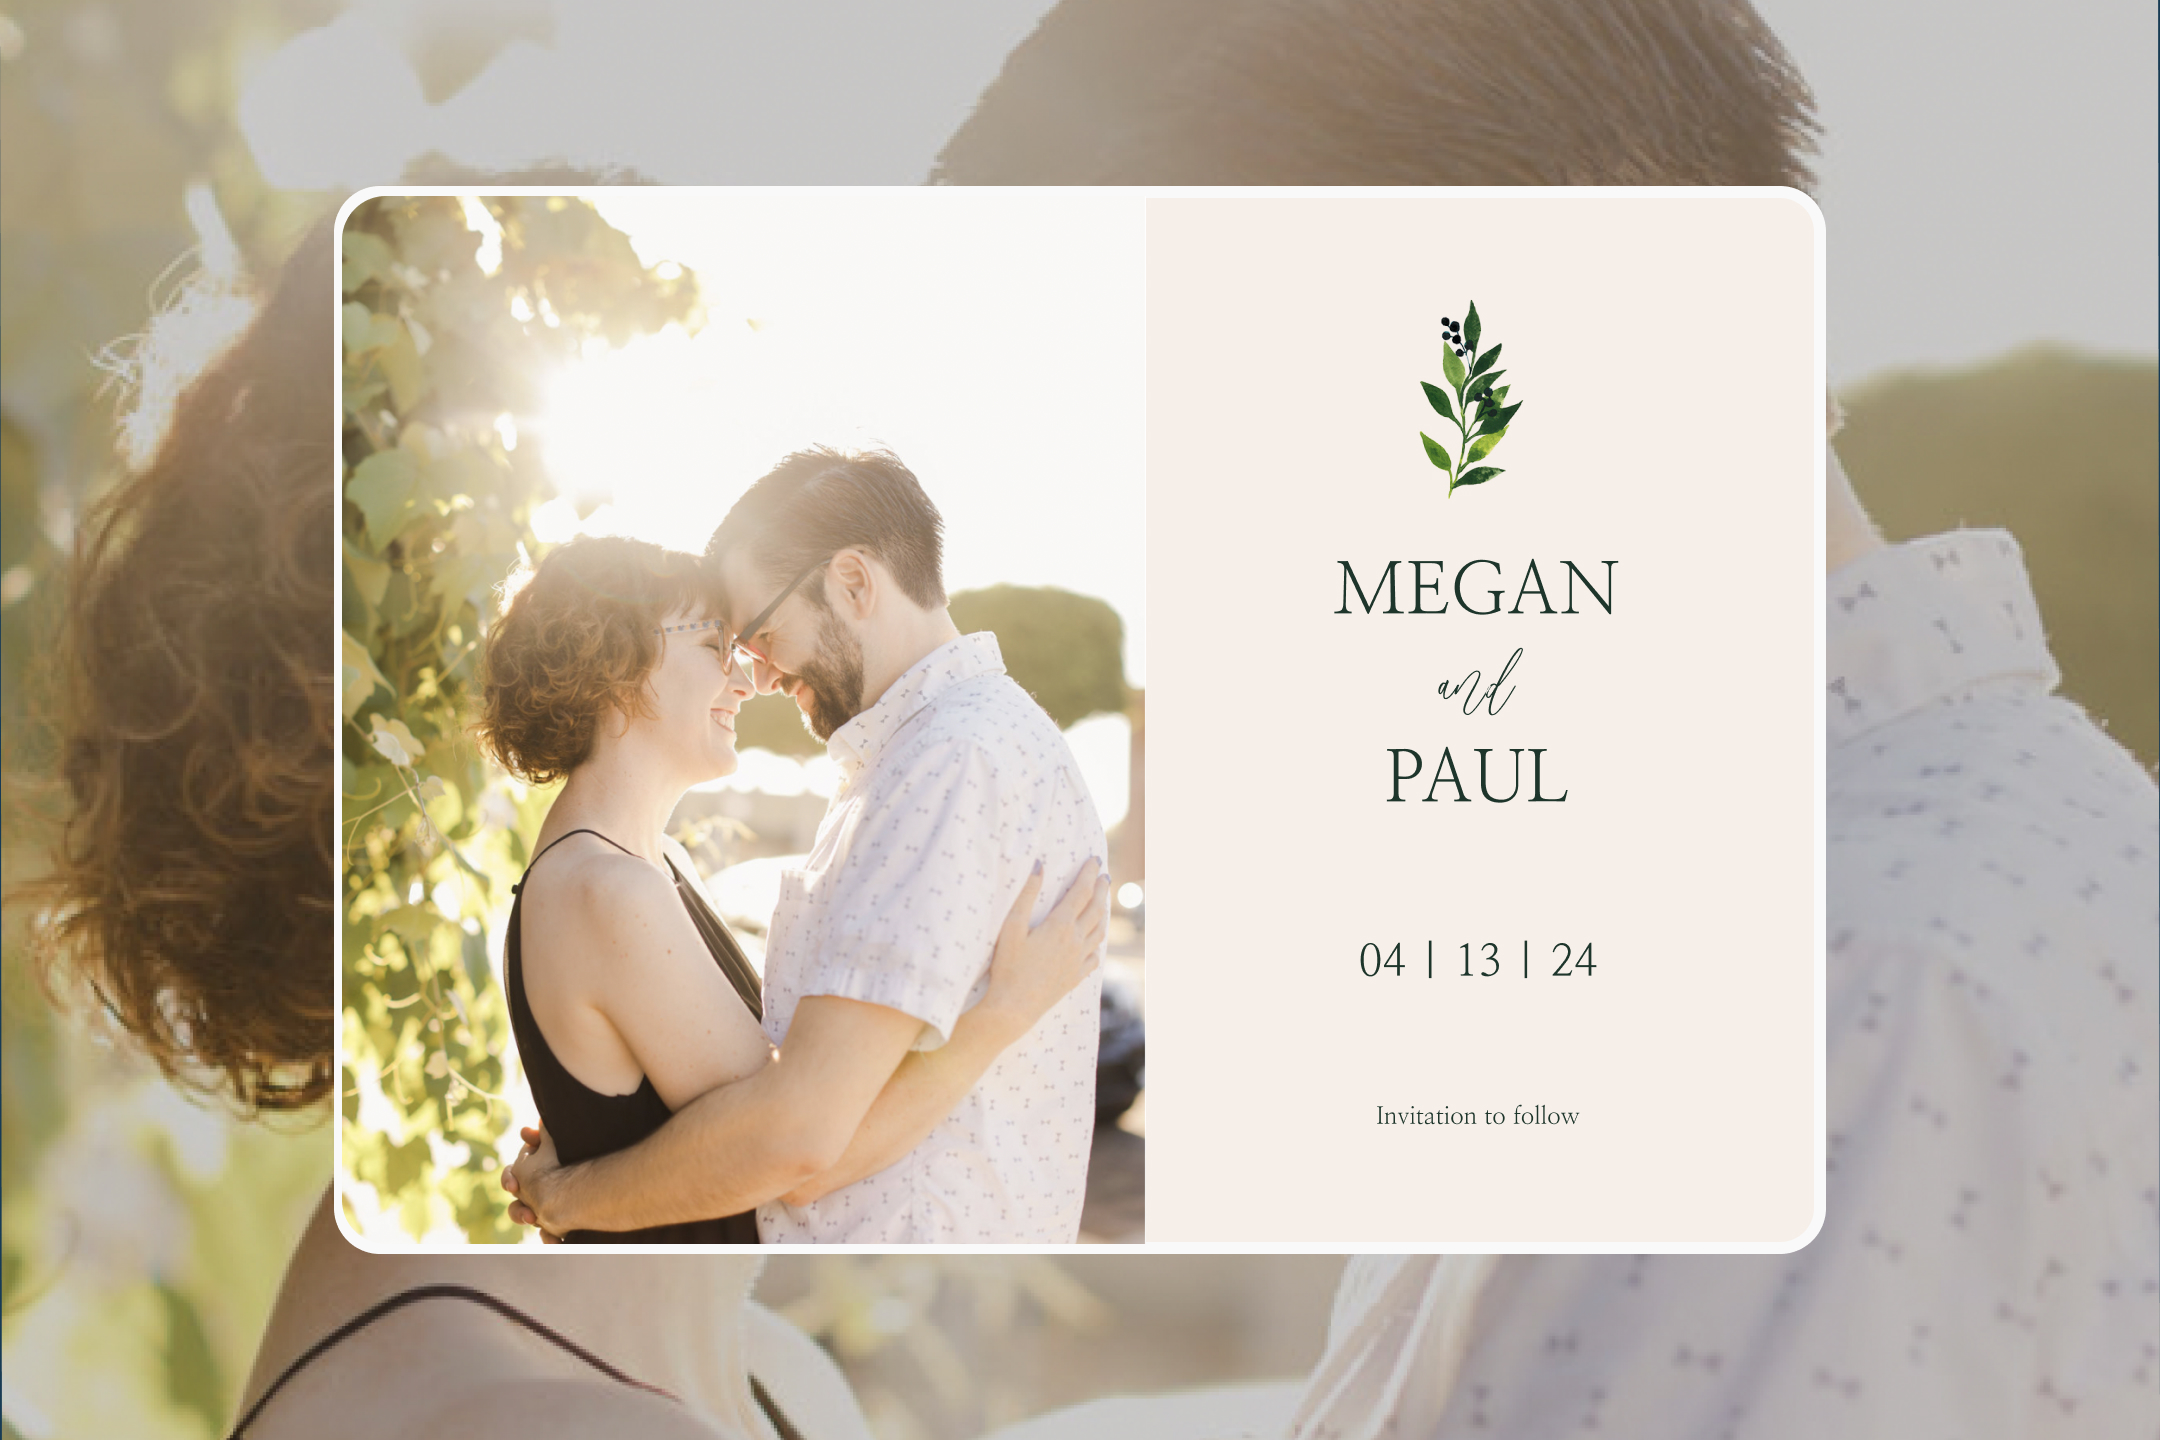 Megan & Paul — The Day it All Began